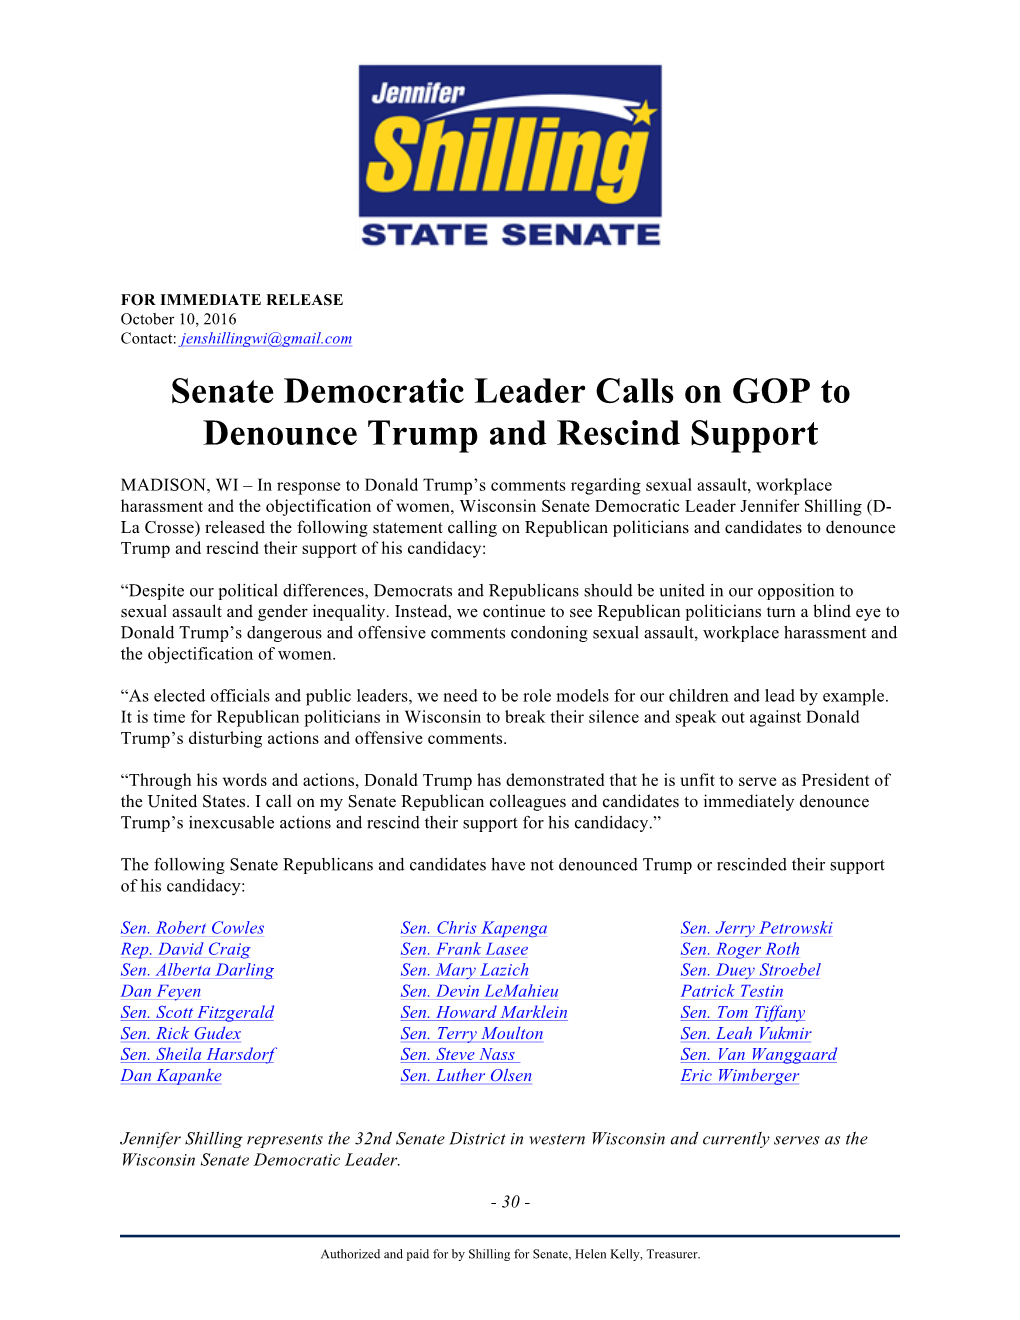 Senate Democratic Leader Calls on GOP to Denounce Trump and Rescind Support